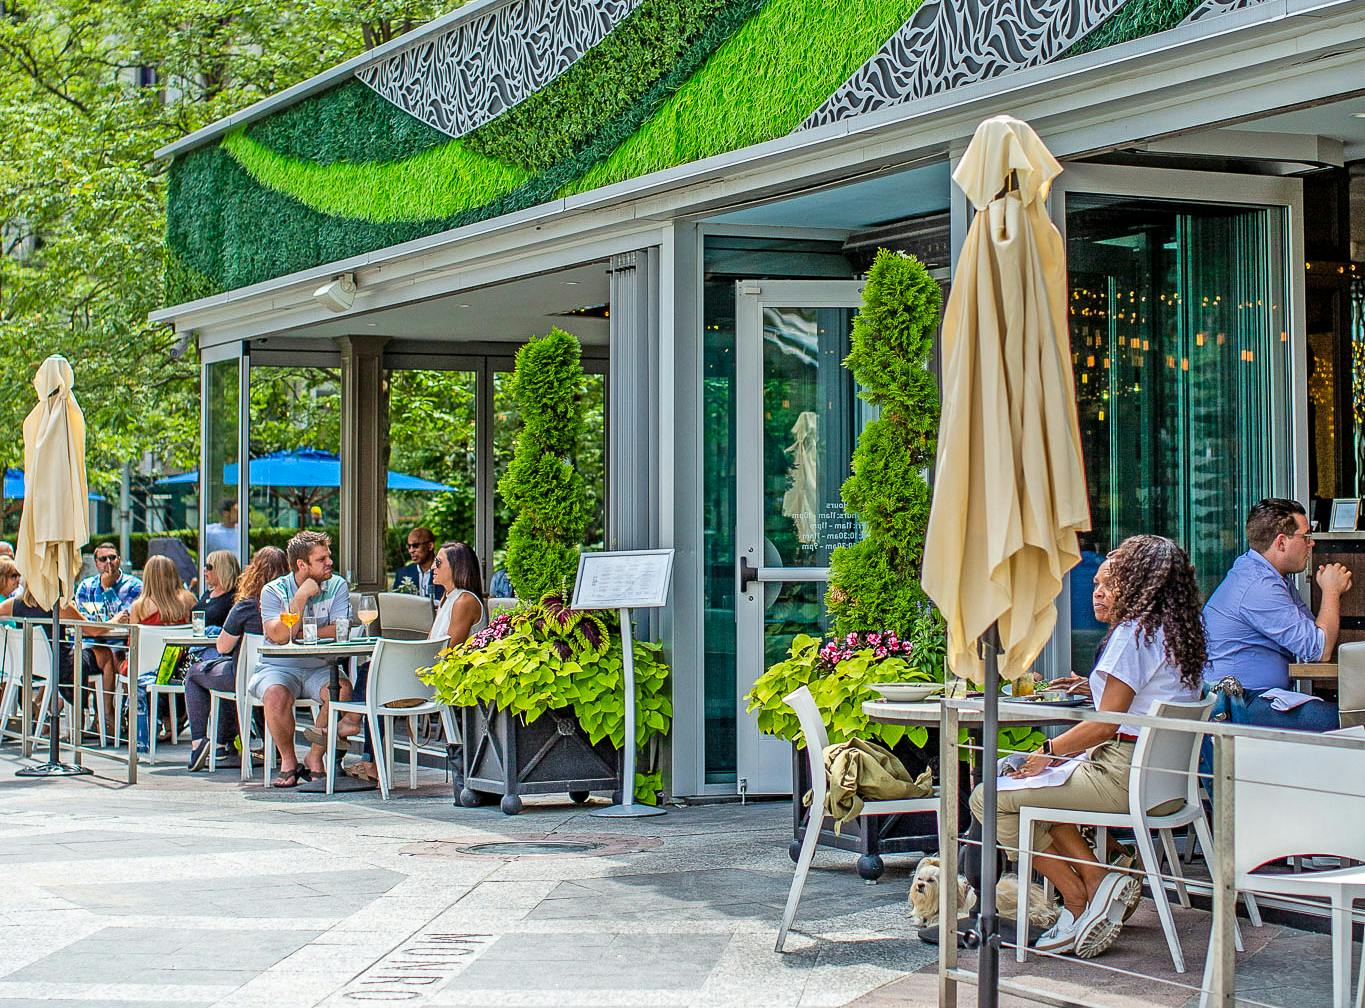 indoor outdoor restaurant with exterior sliding glass walls attracts customers